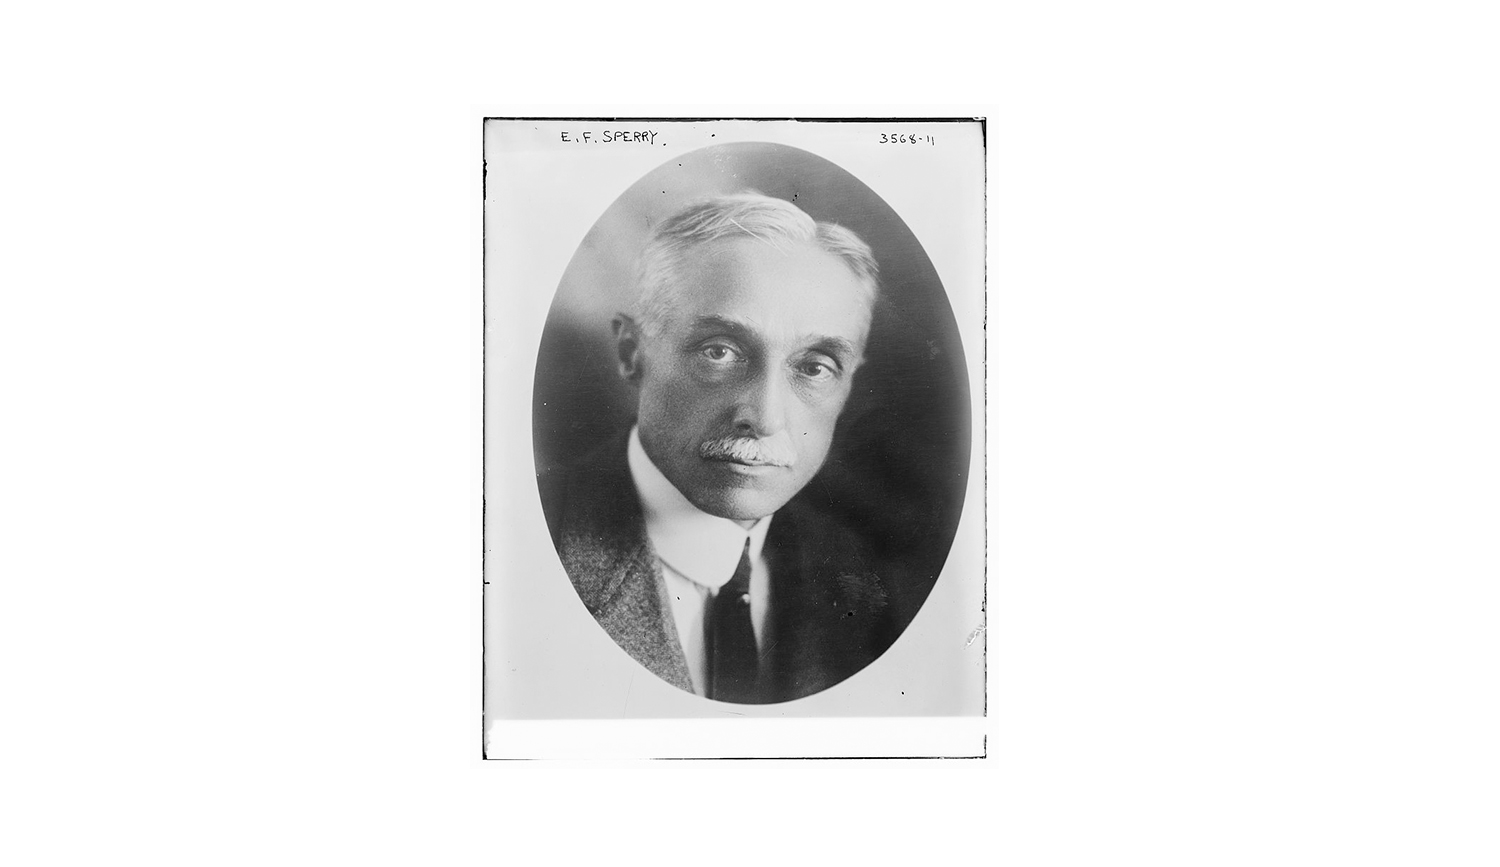 Elmer Sperry photo portrait